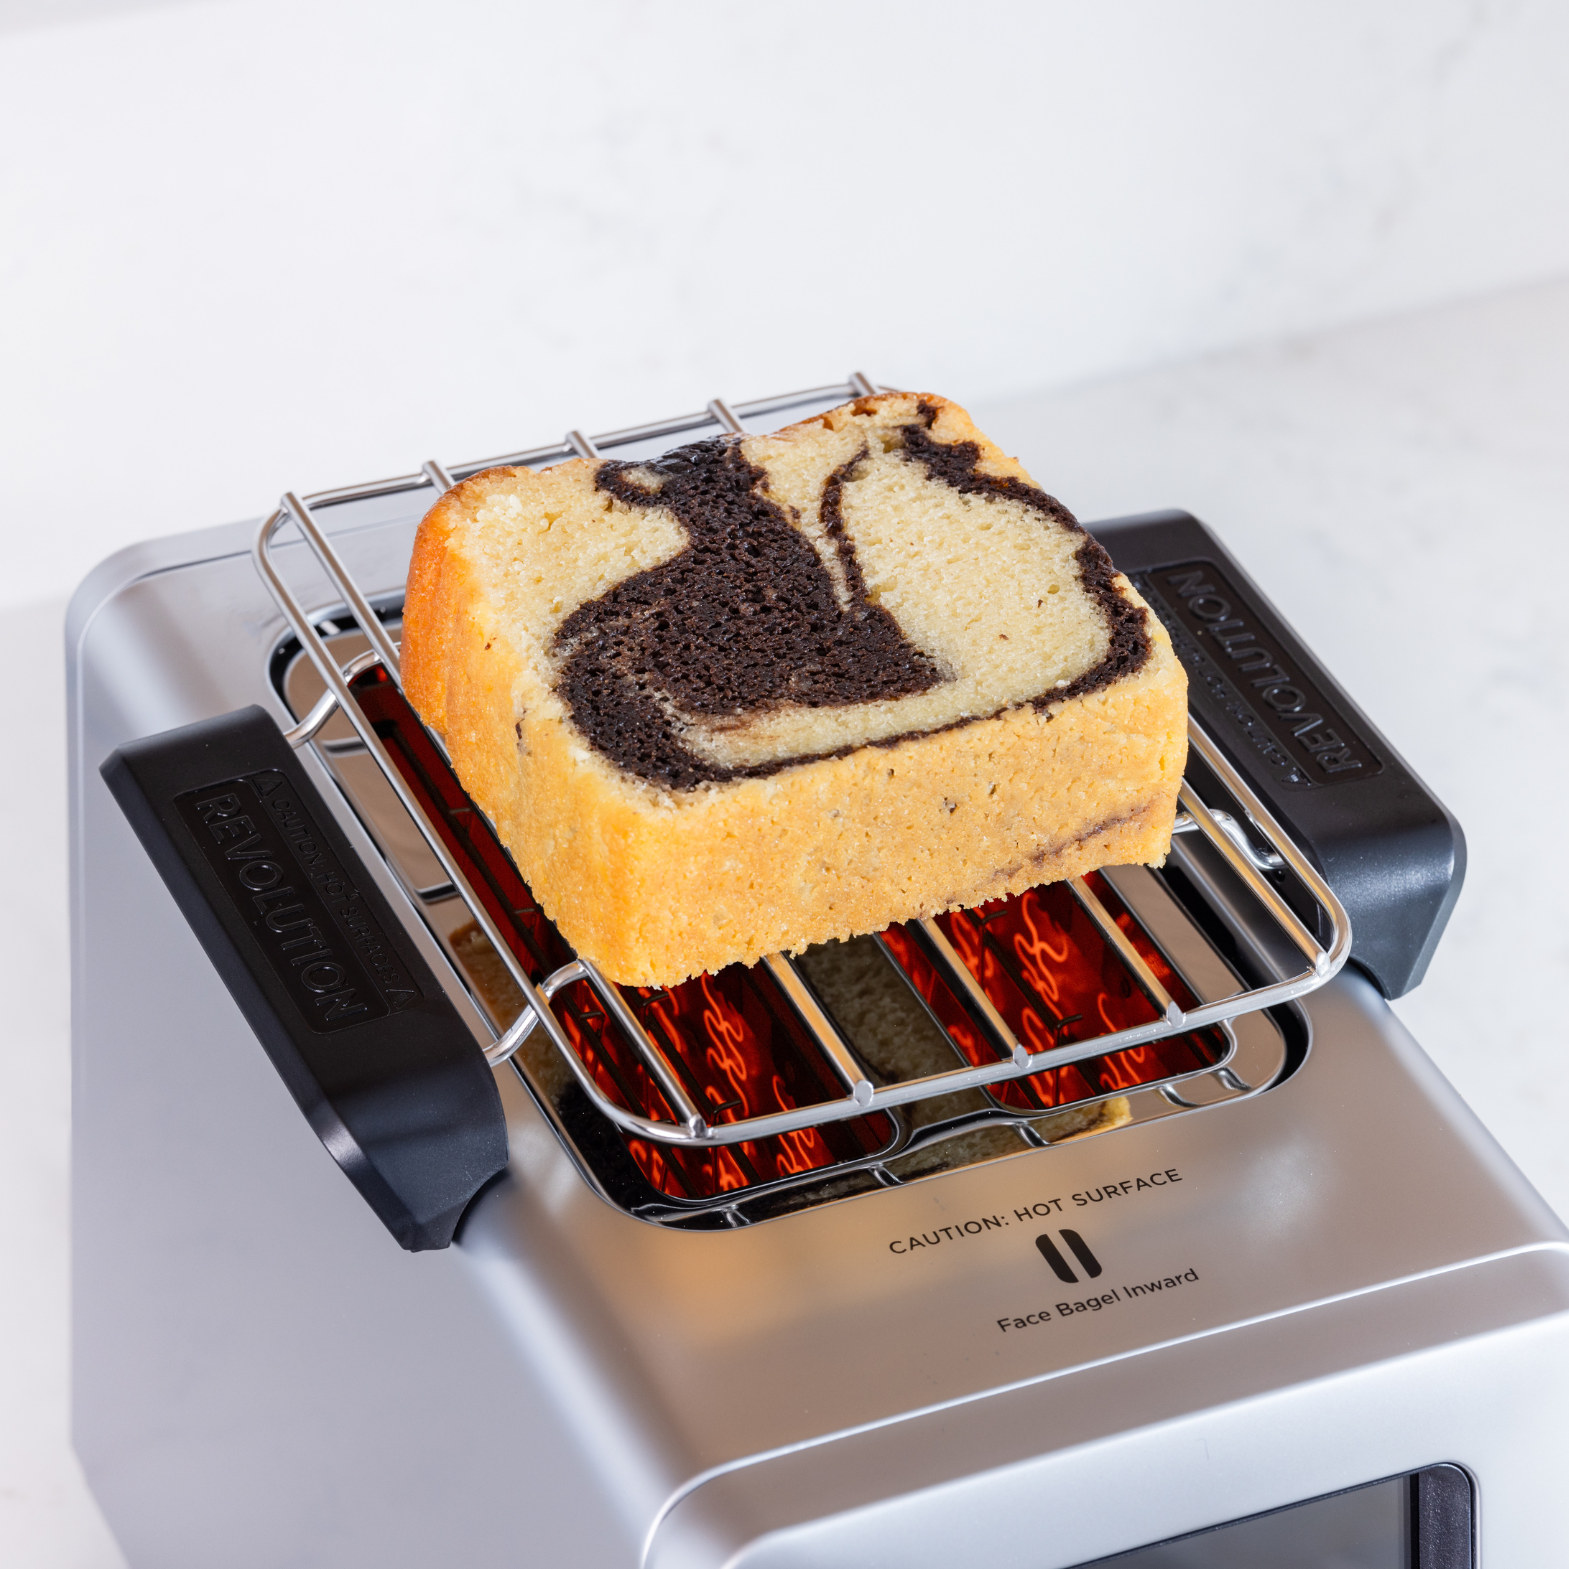 Revolution Cooking, R270 2-Slice High Speed Smart Toaster - Zola